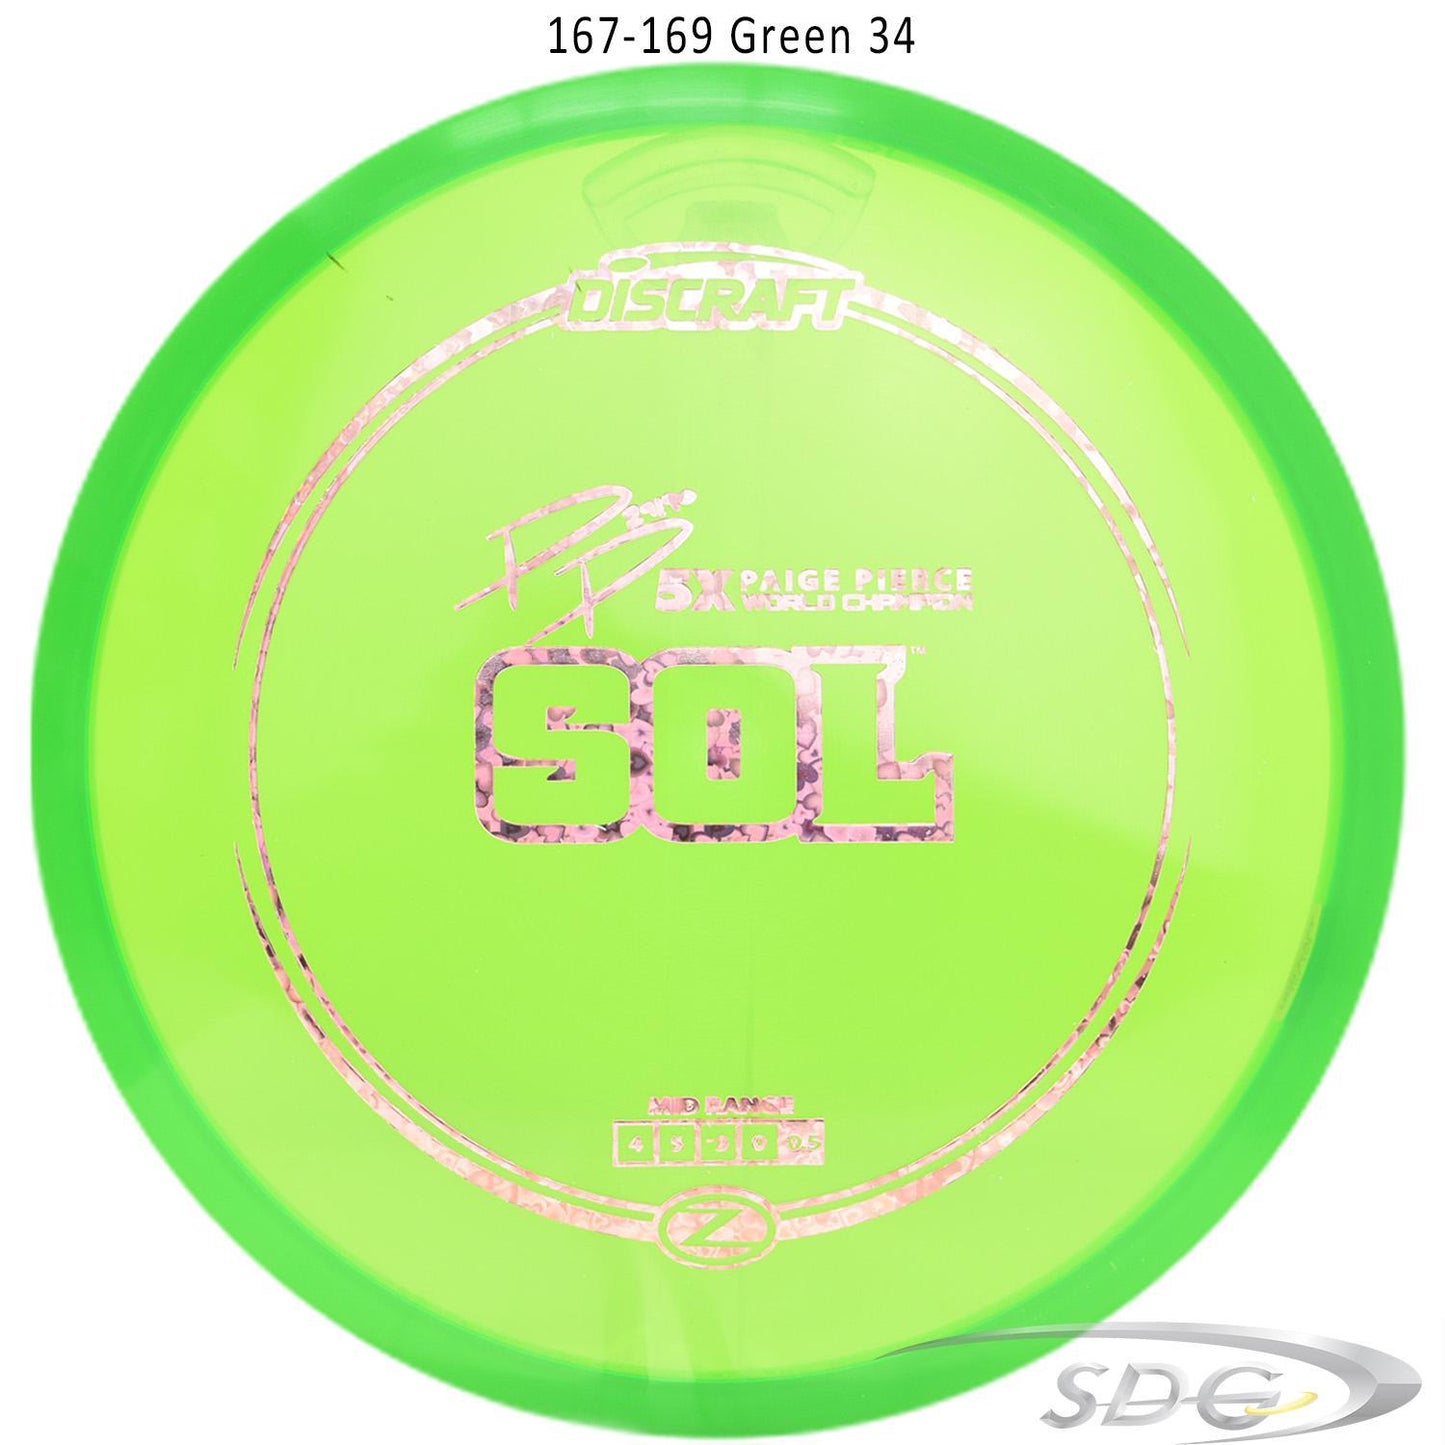 discraft-z-line-sol-paige-pierce-signature-disc-golf-mid-range 167-169 Green 34